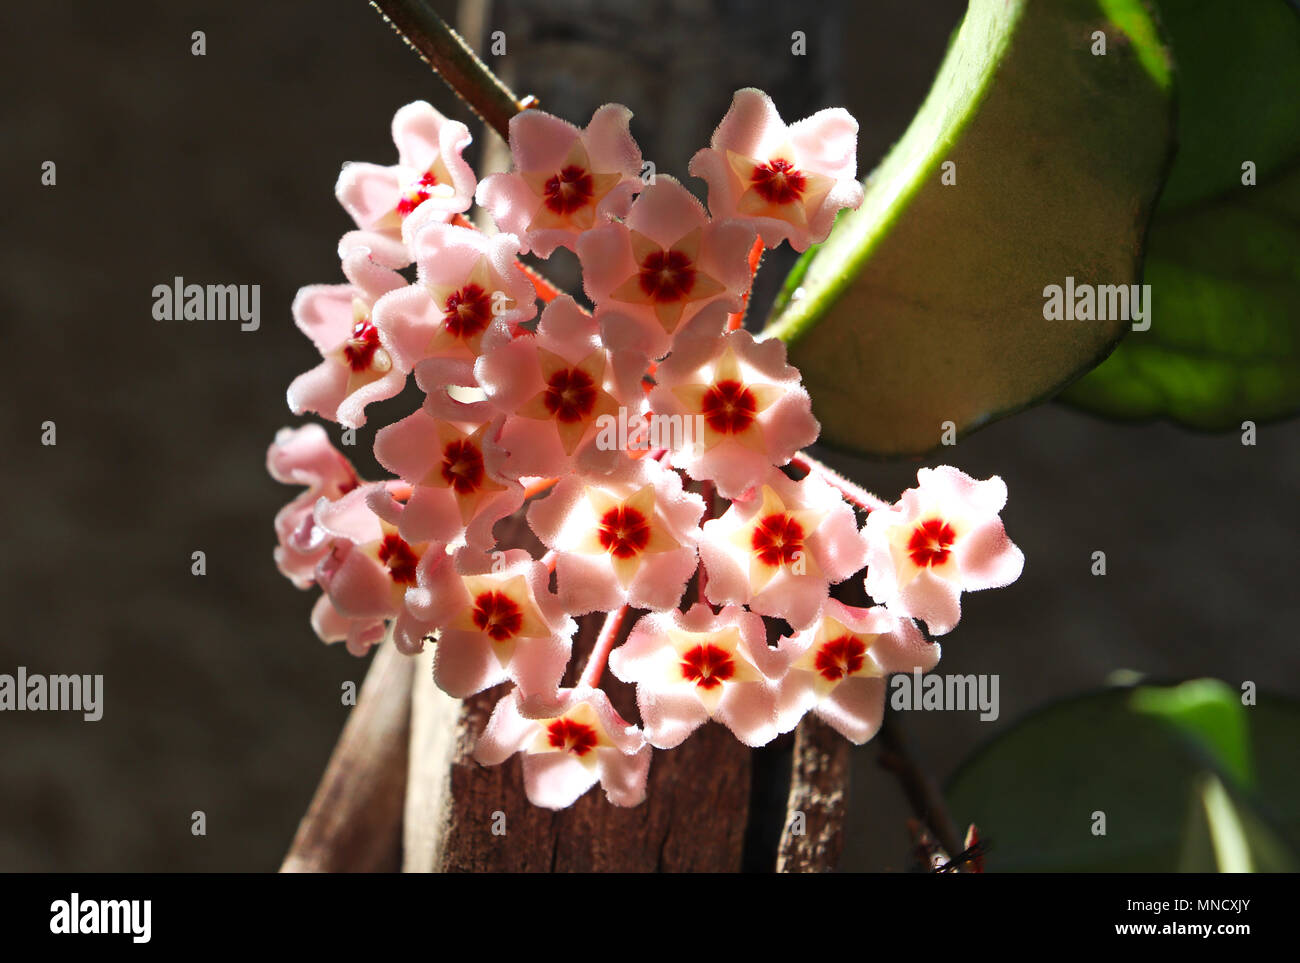 Hoya or wax plant flower blossom Stock Photo